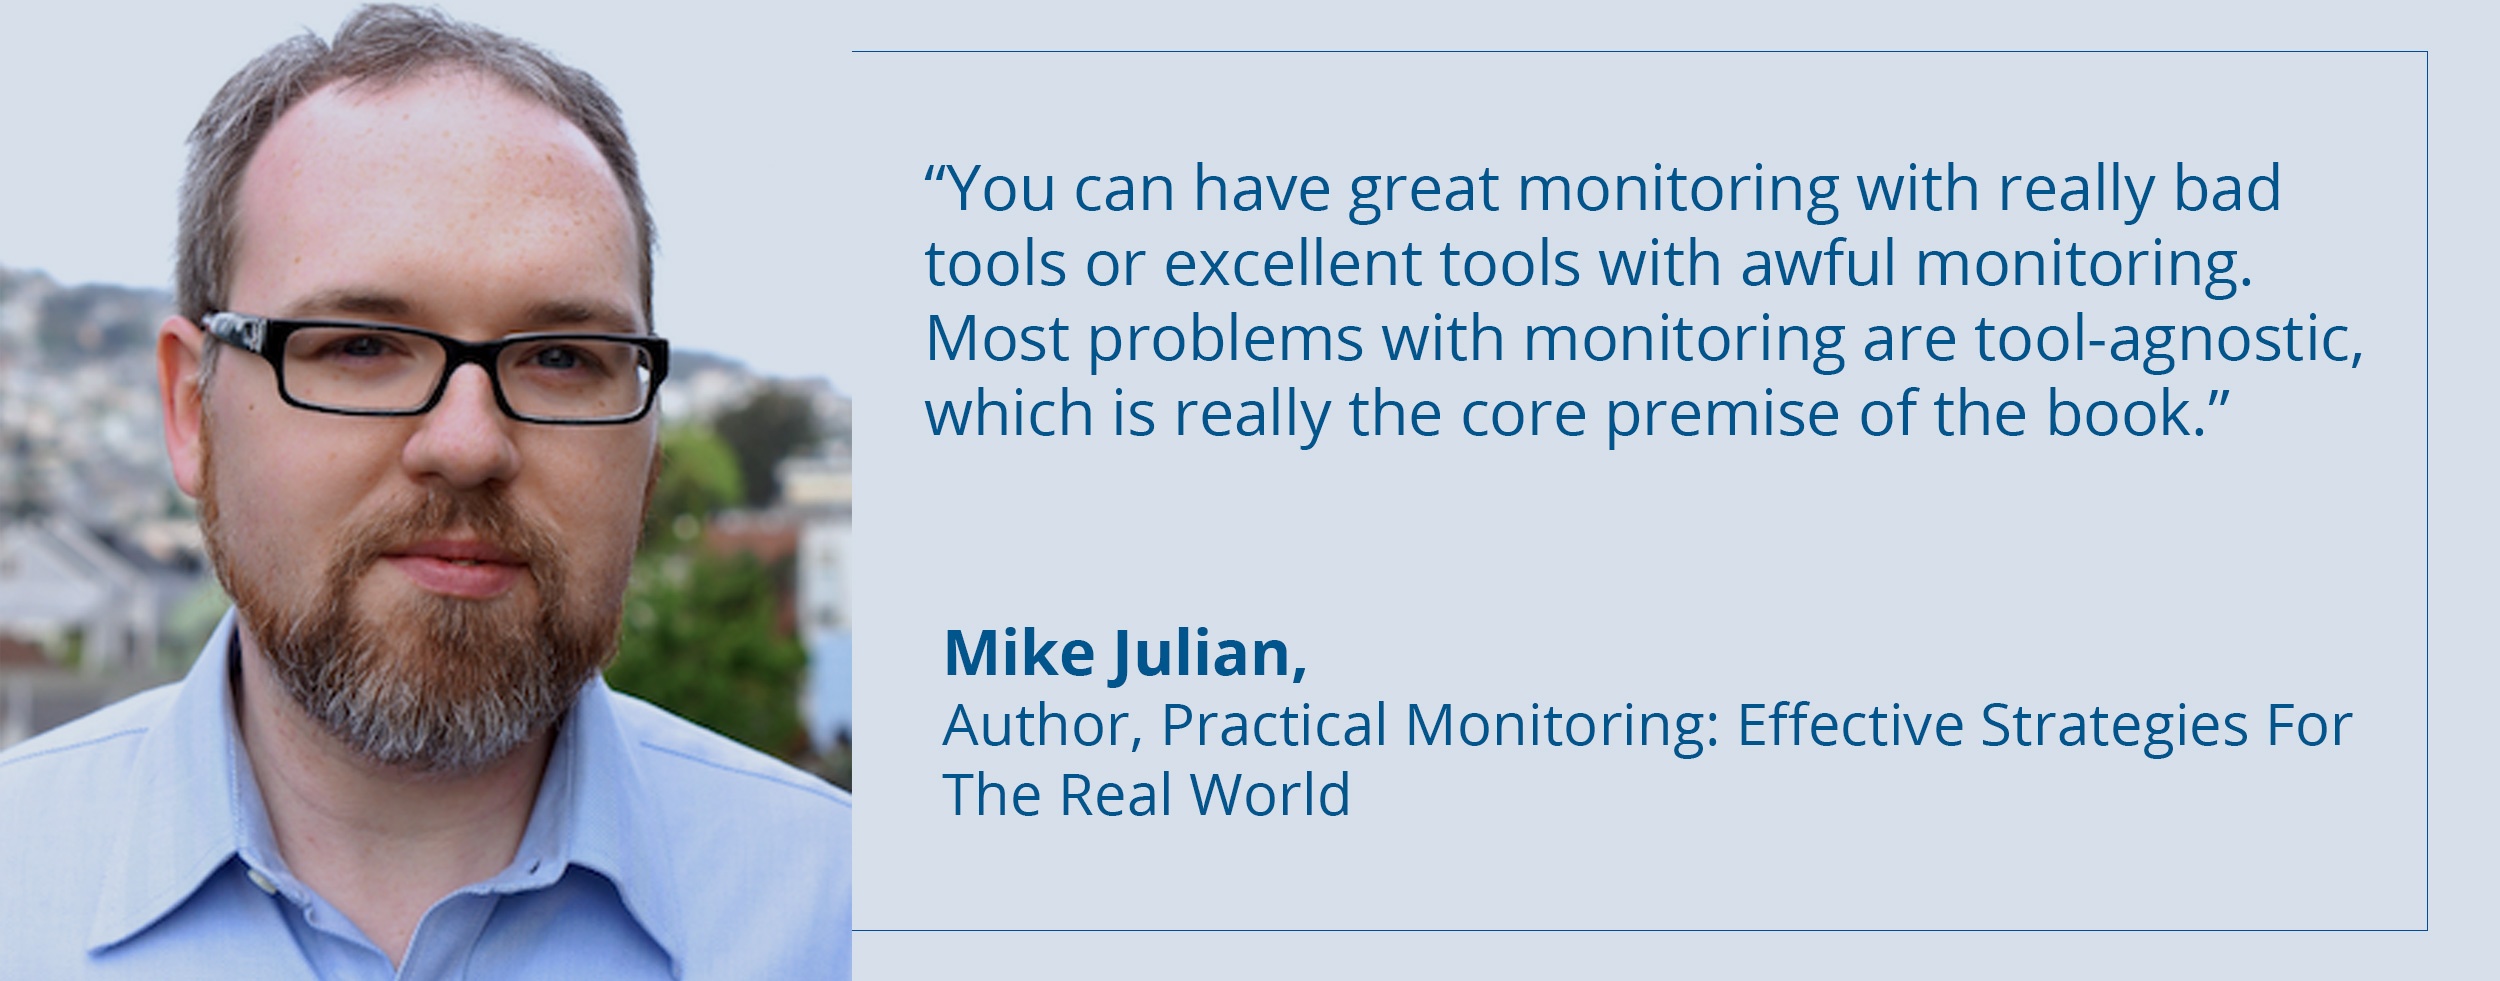 Mike Julian On Practical Monitoring